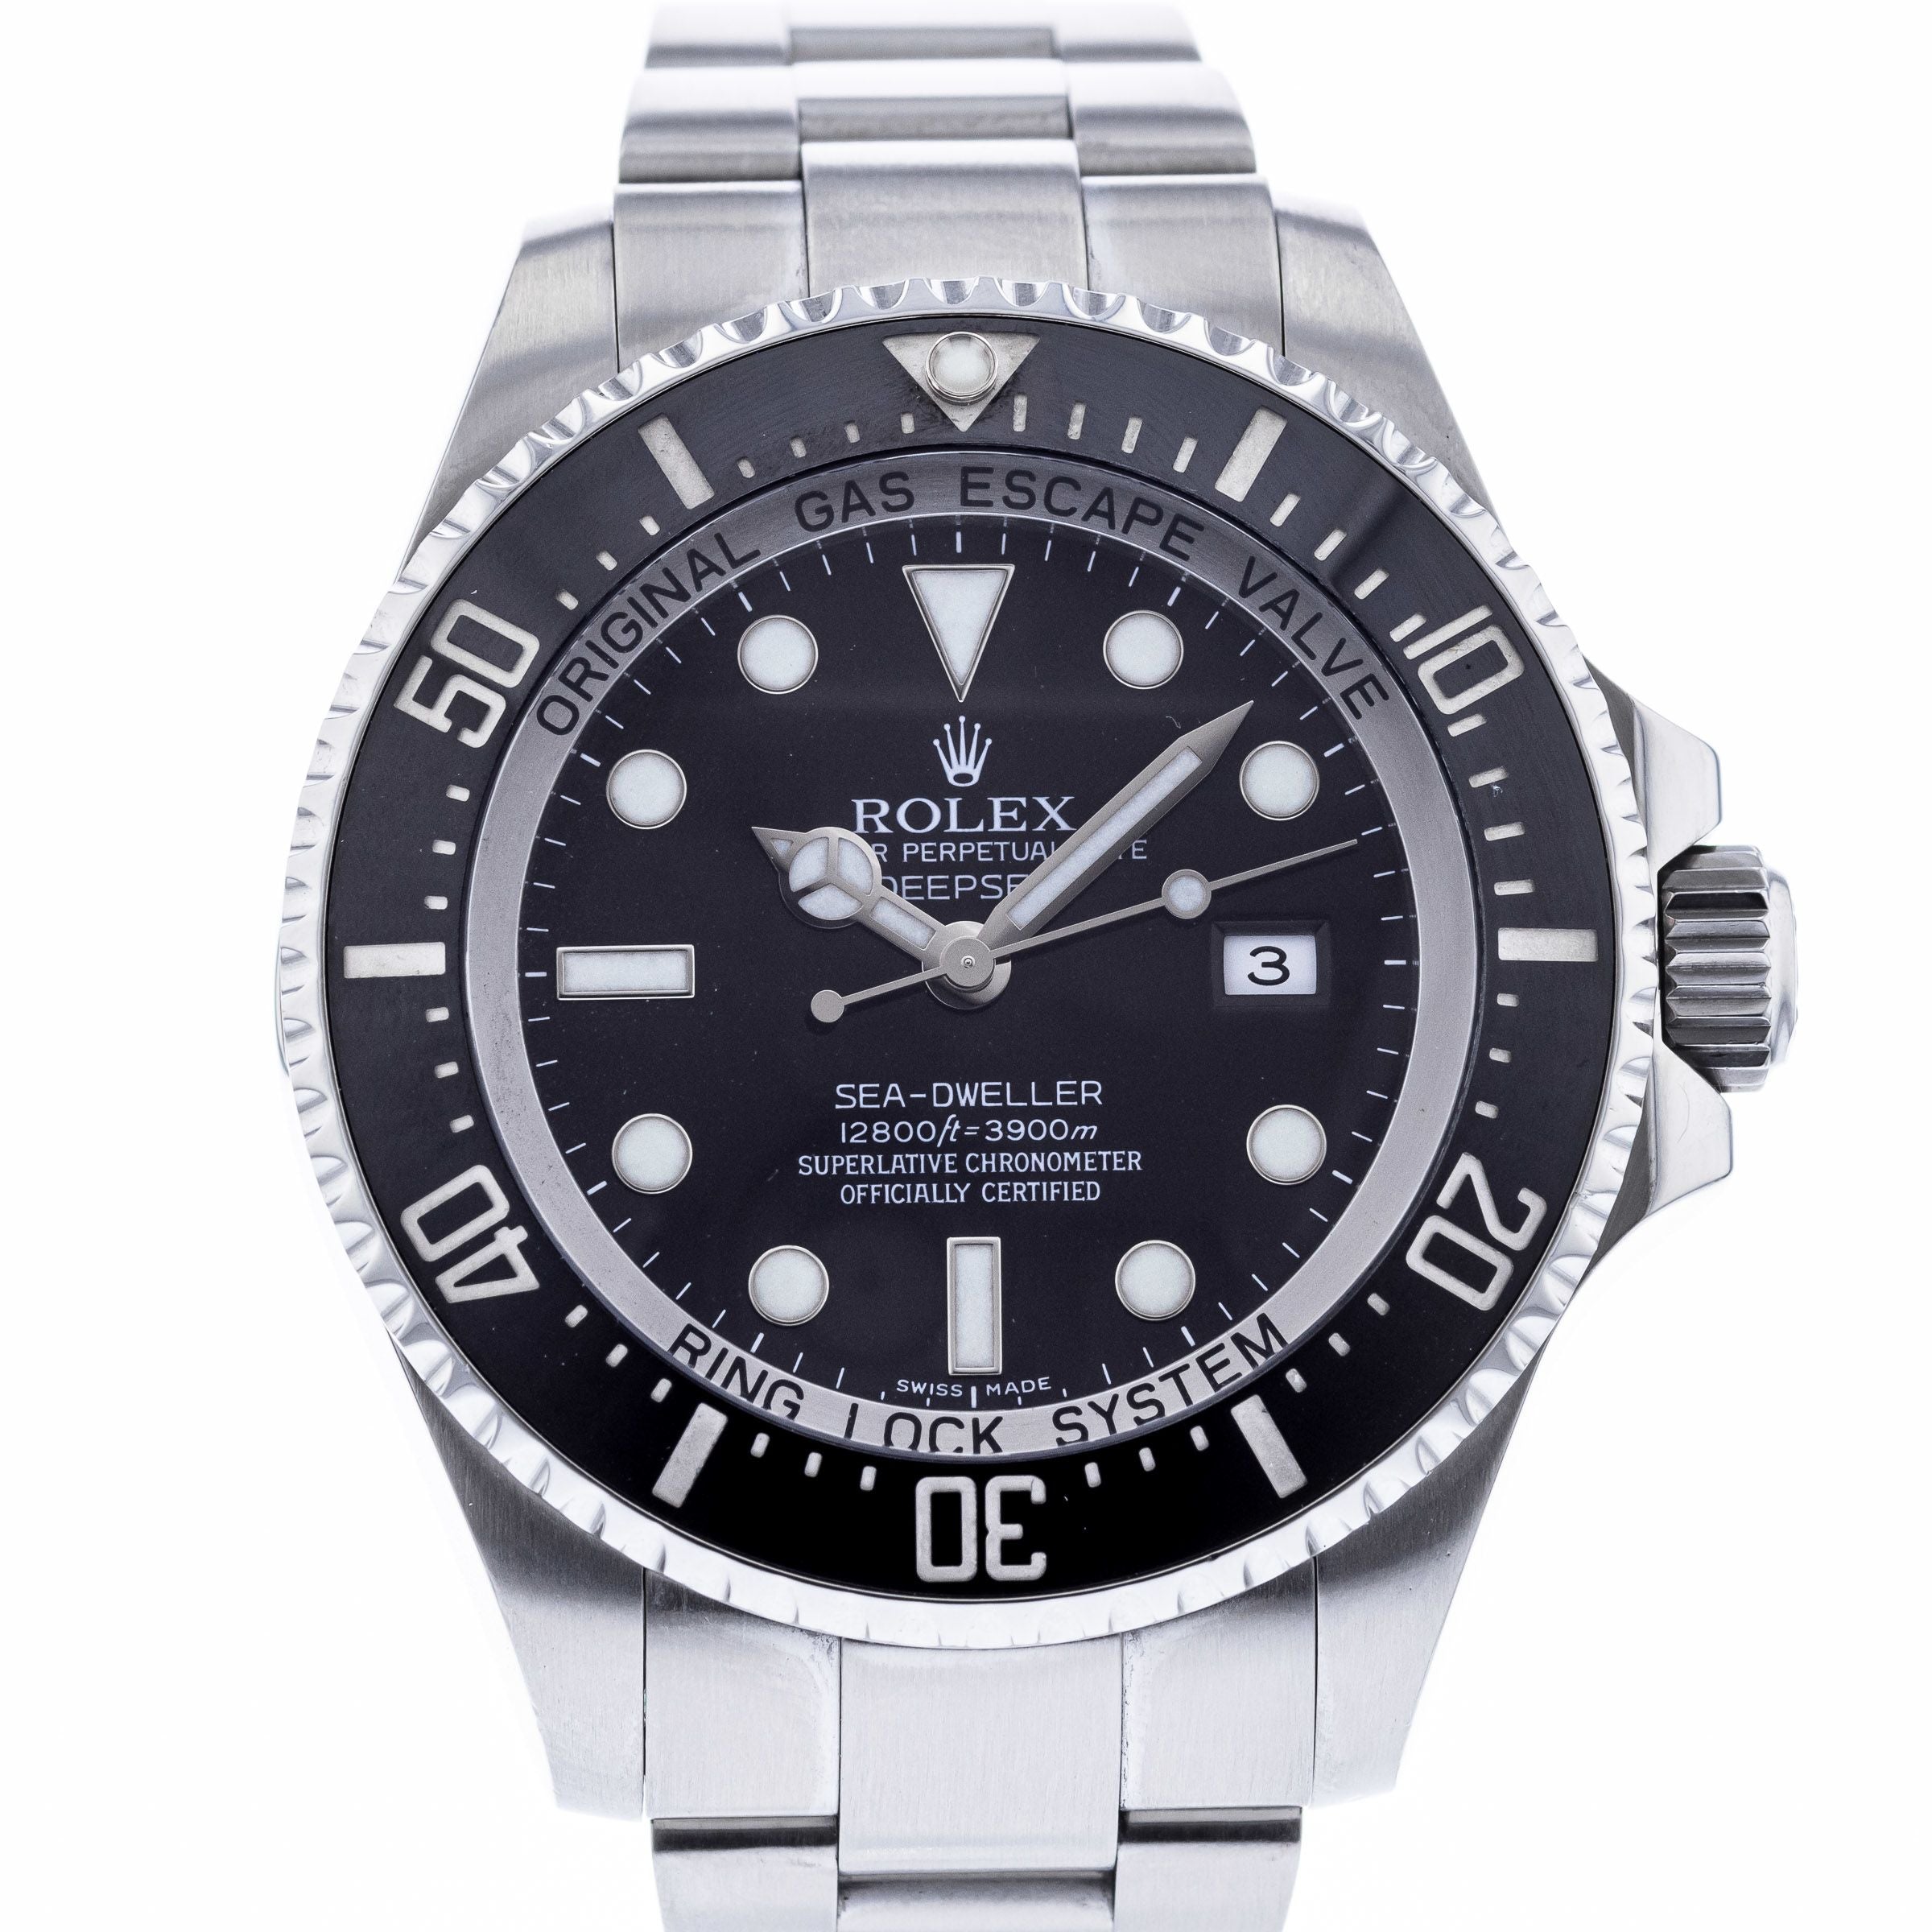 Authentic Used Sea-Dweller Deepsea Watch